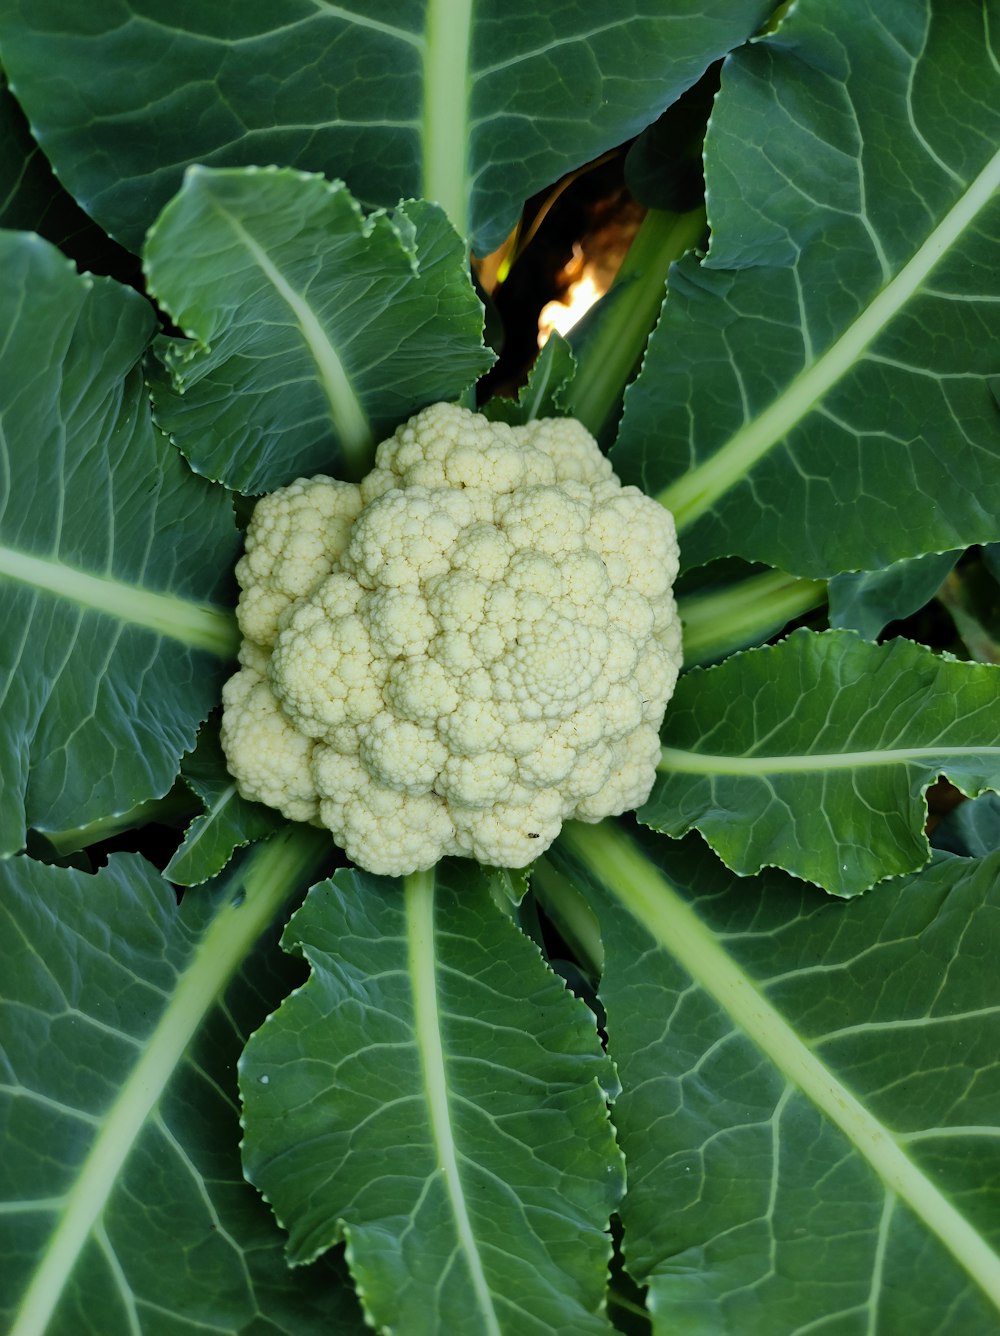 a head of broccoli growing in a garden